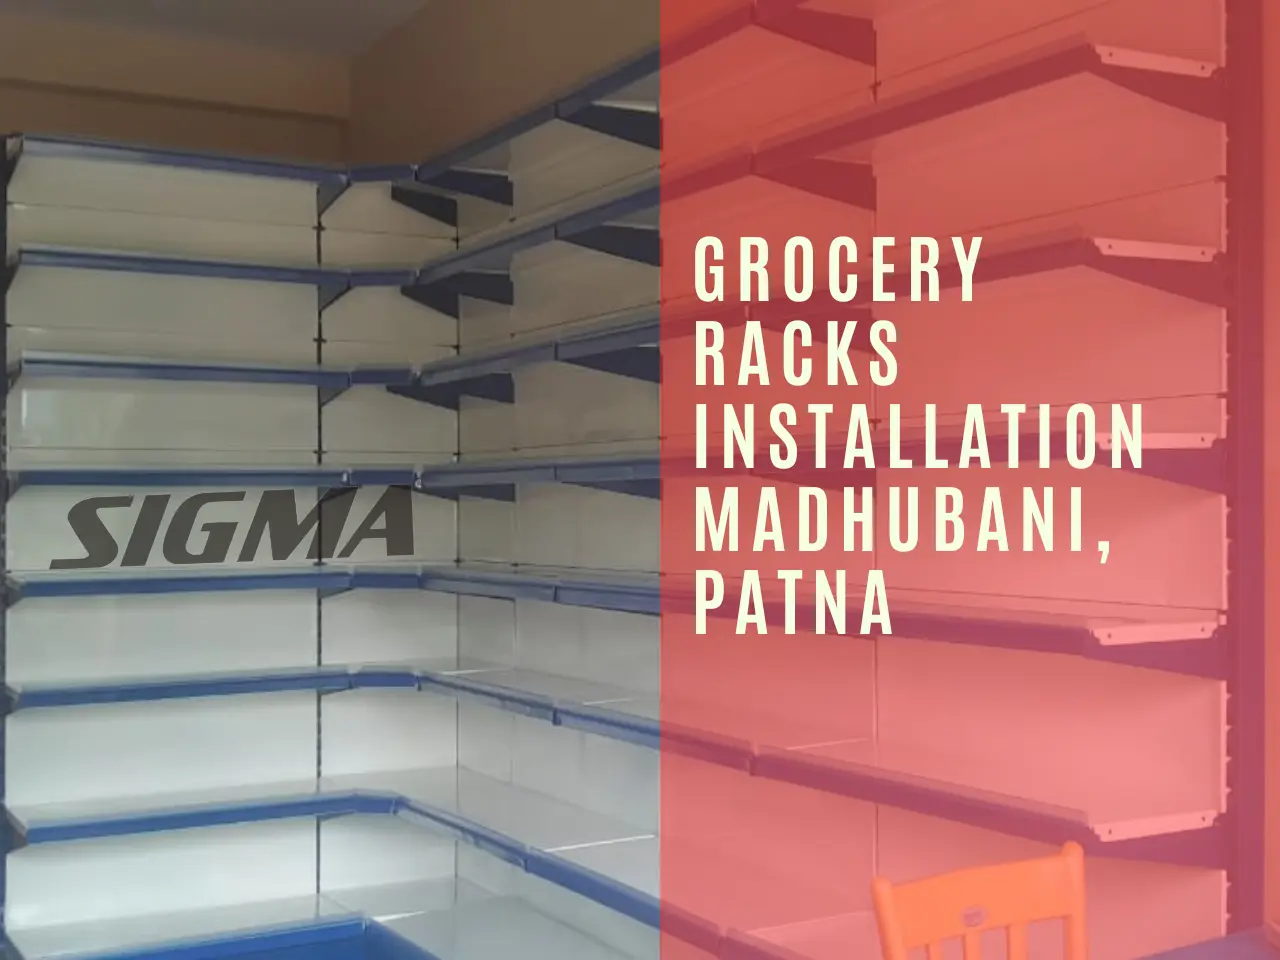 grocery racks Installation  madhubani, patna.webp